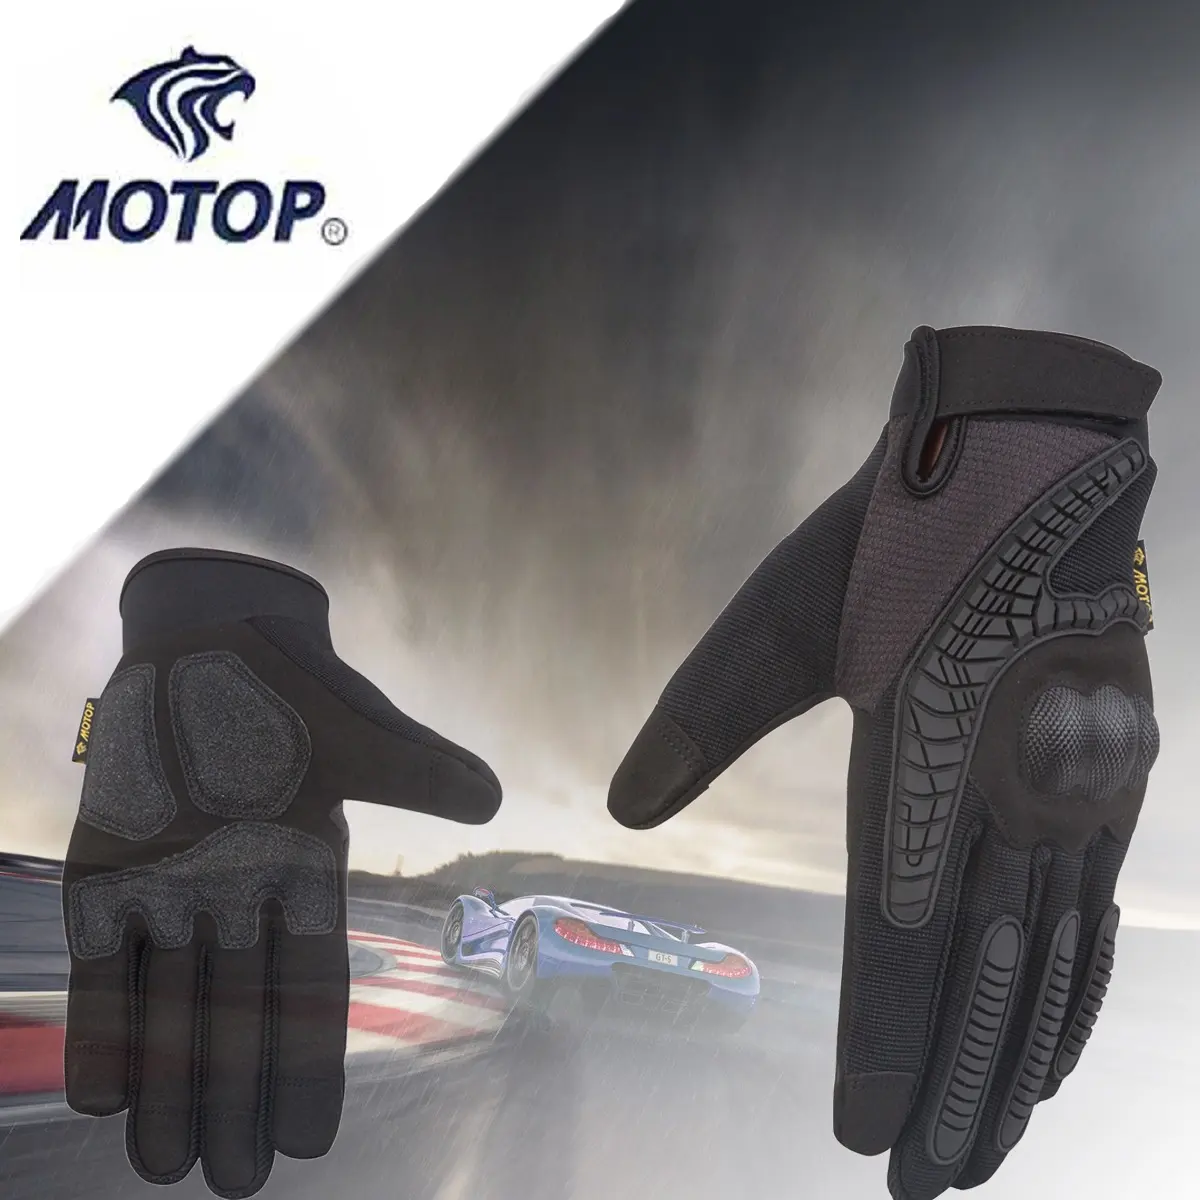 Motorcycl Glove Racing Glove Black Knuckle Protected Sports Motocross Motorcycle Racing Glove